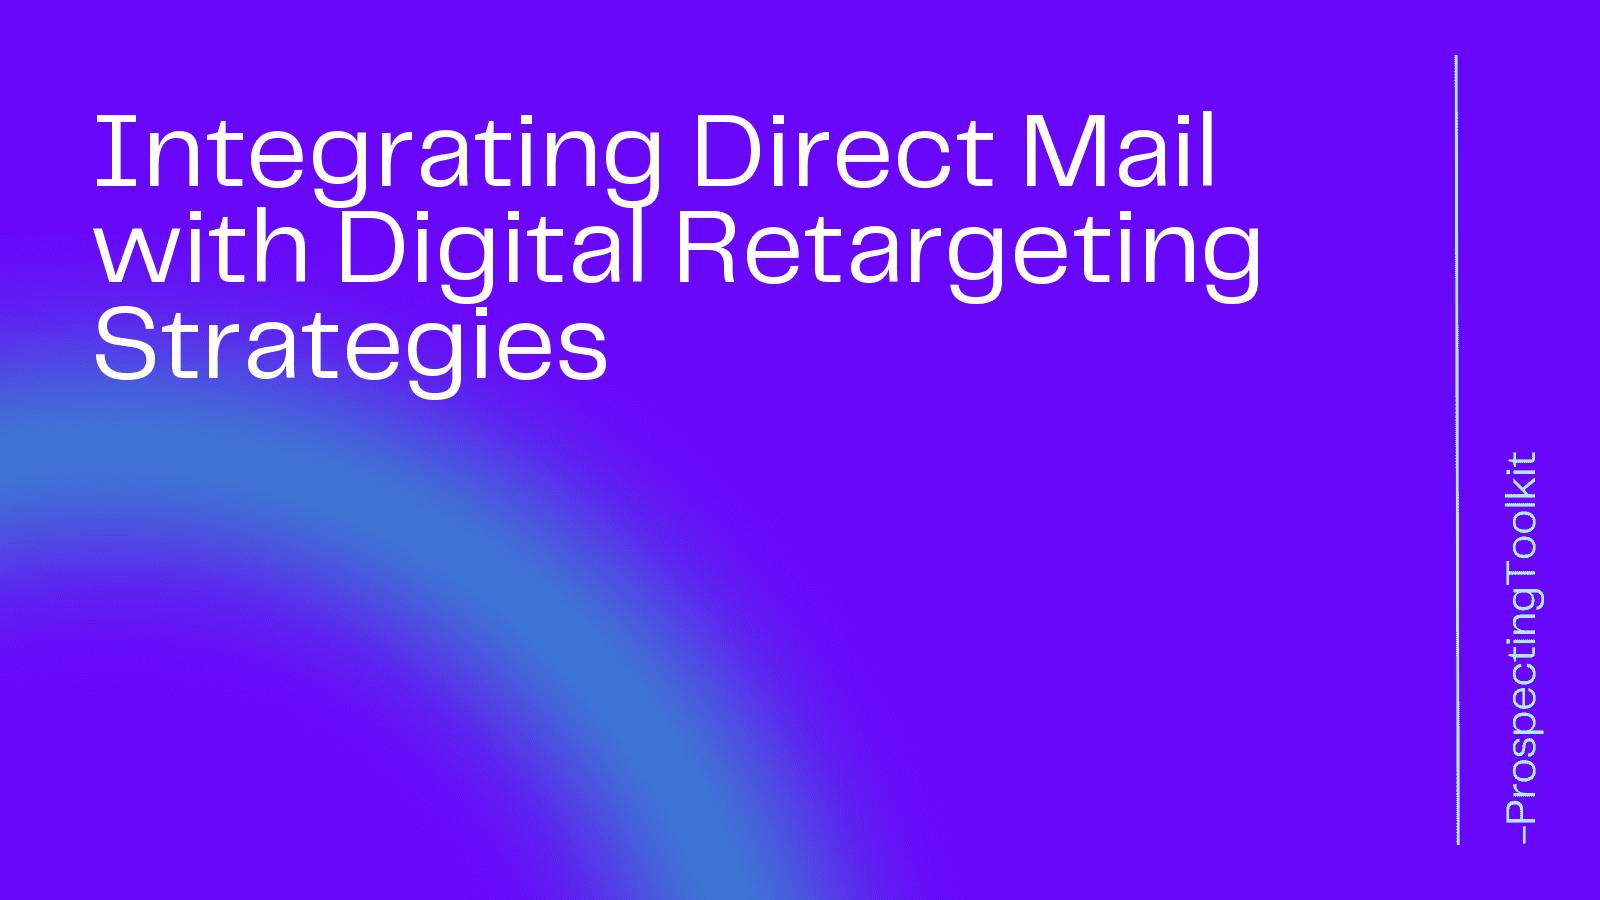 Integrating Direct Mail with Digital Retargeting Strategies